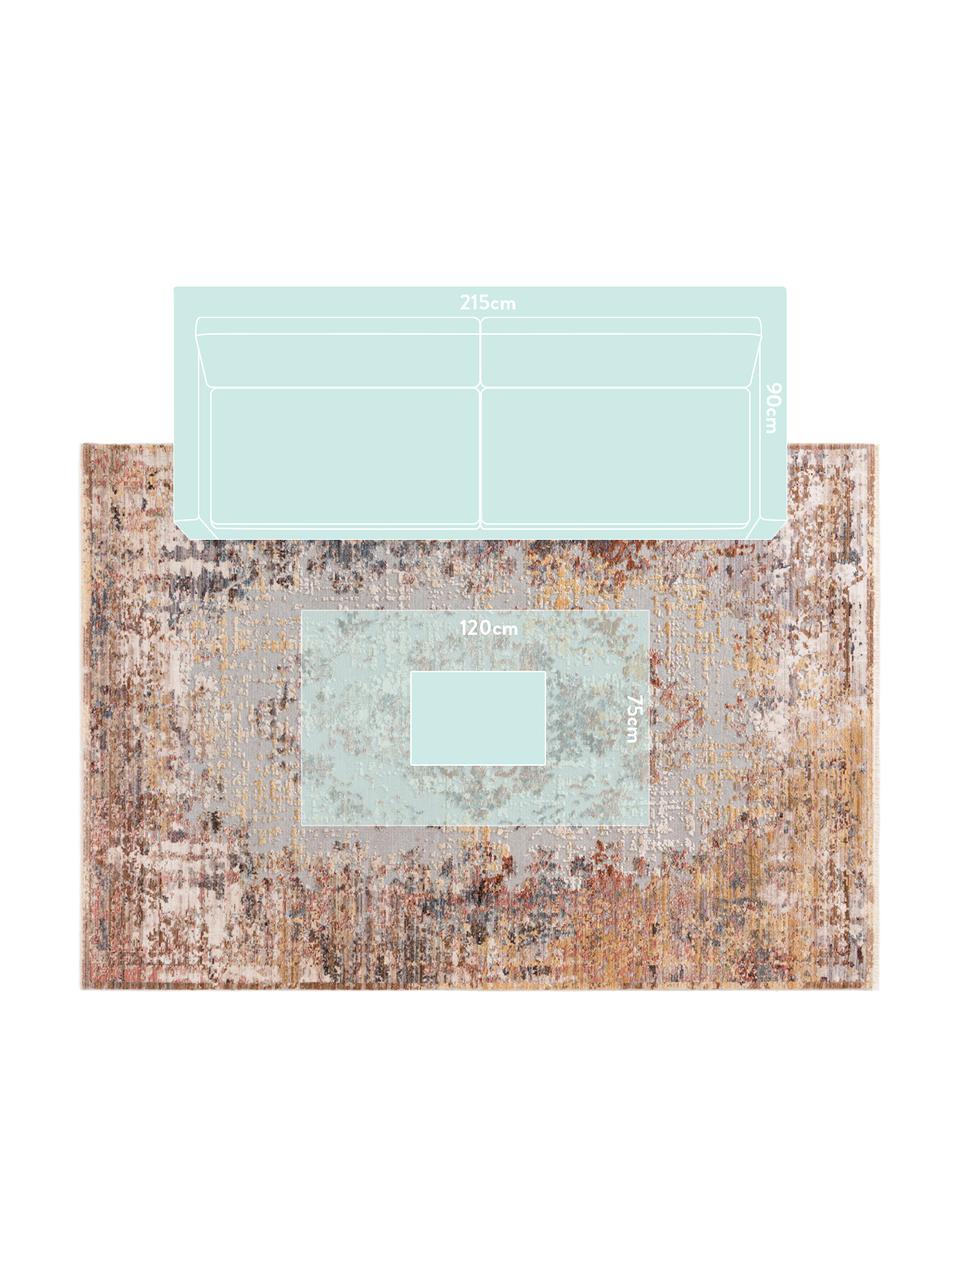 Teppich Valencia, Flor: Polyester, Beigetöne, Brauntöne, Grautöne, B 200 x L 290 cm (Größe L)